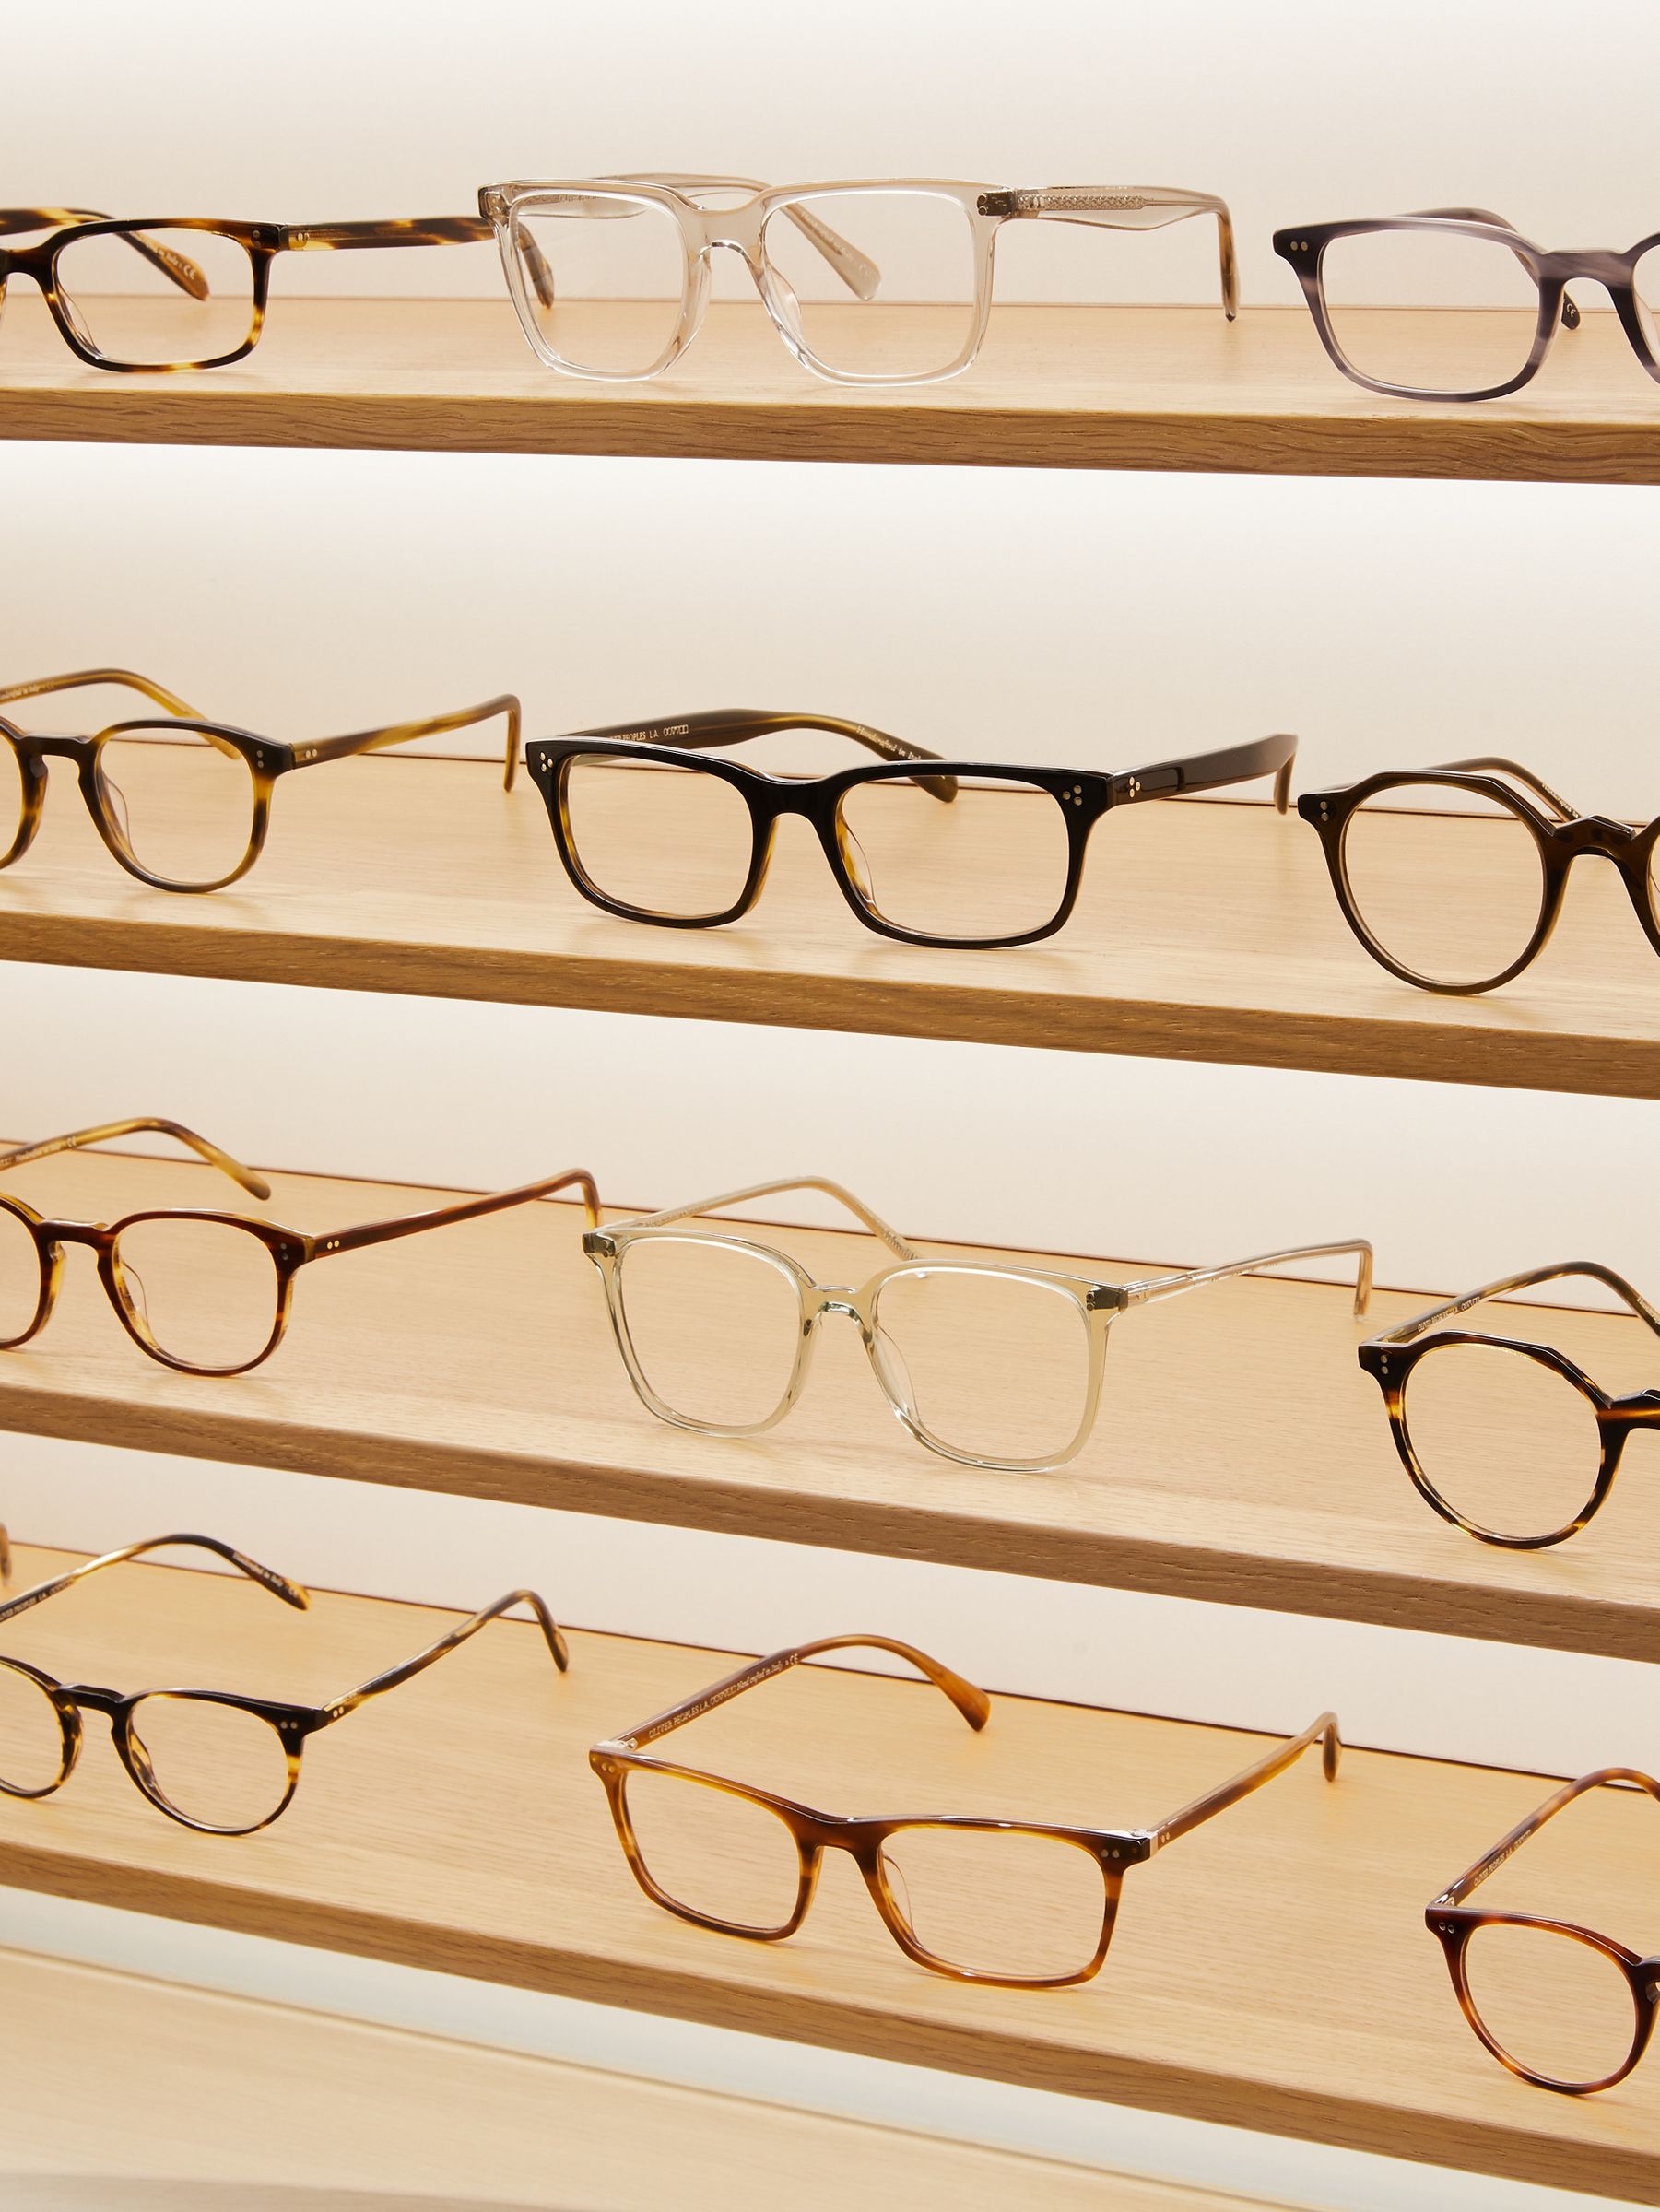 an image of reading glasses on shelves